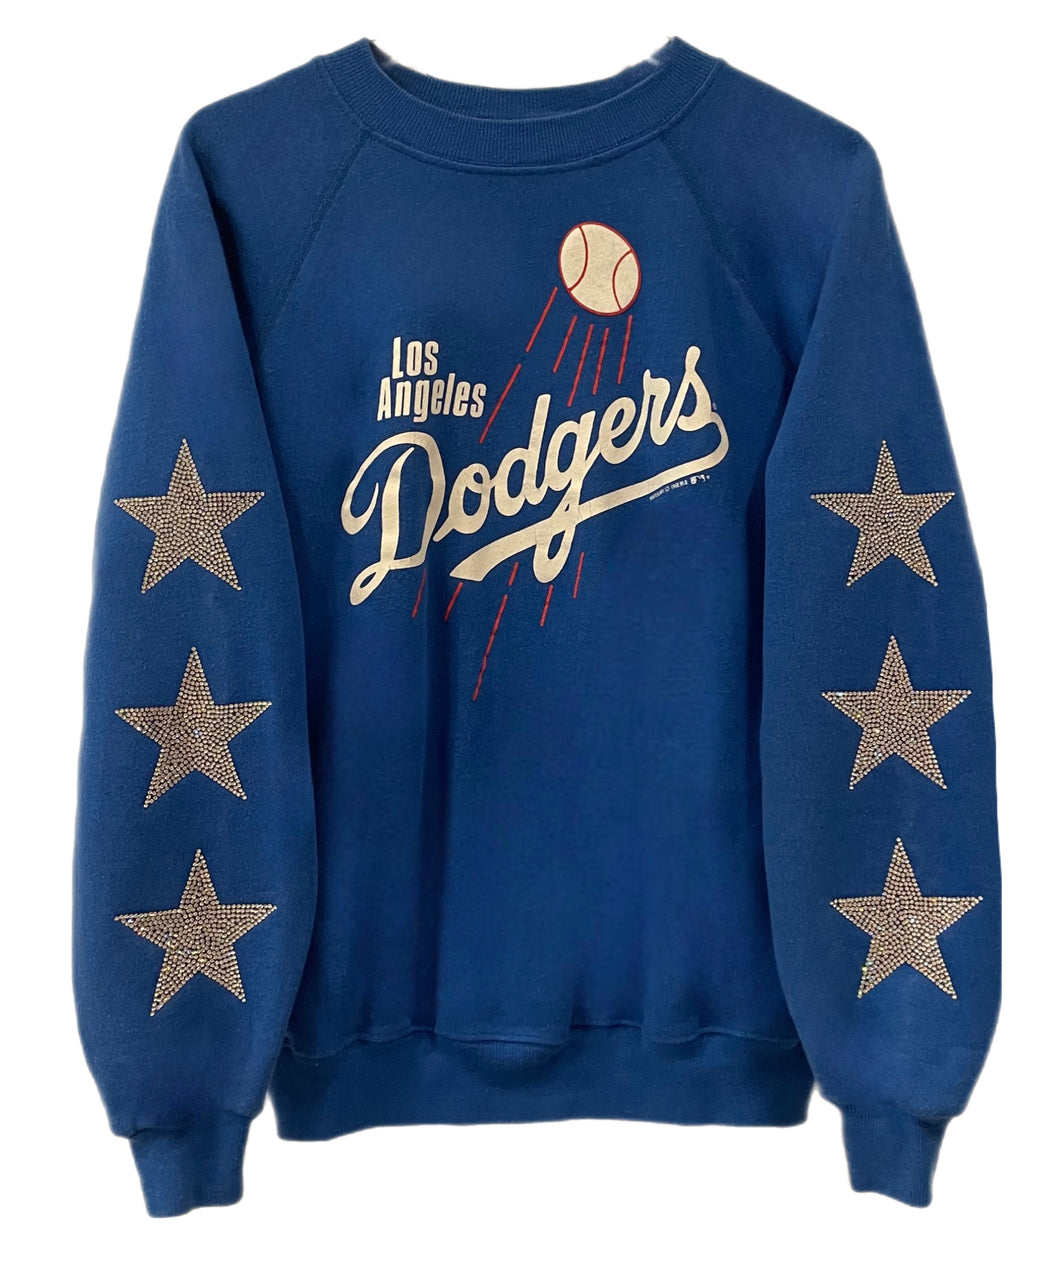 LA Dodgers, MLB One of a KIND “Rare Find” Vintage Sweatshirt with Three Crystal Star Design